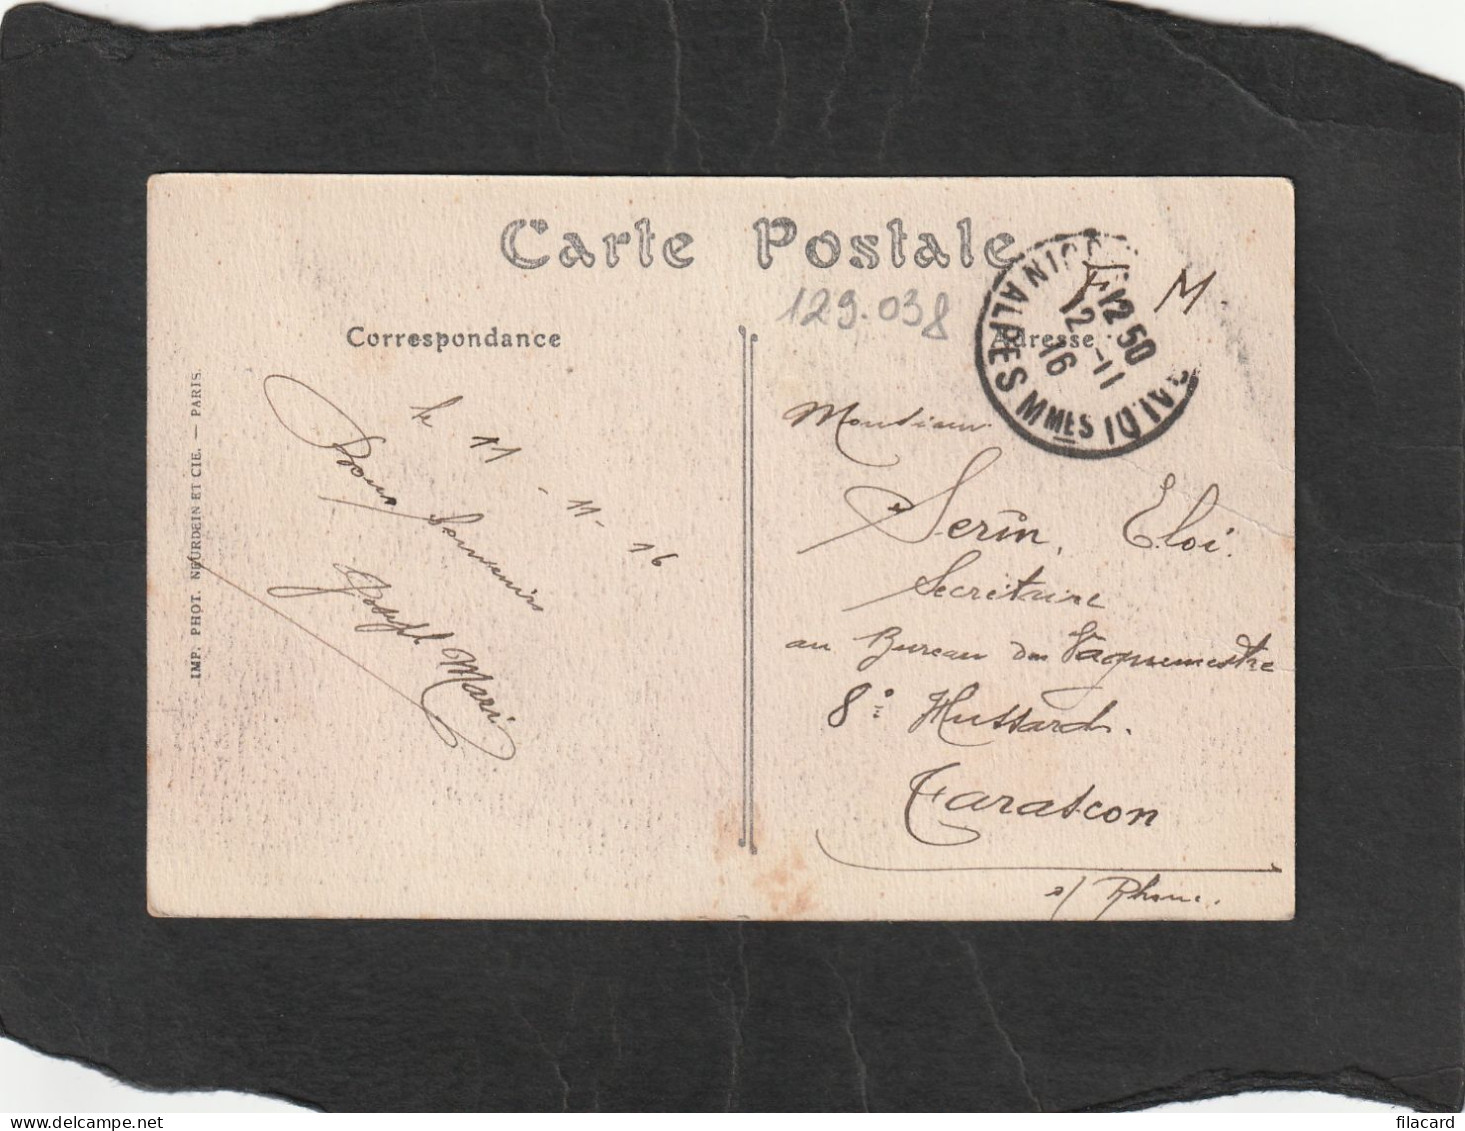 129038         Francia,     Nice,   L"Avenue   De La  Gare,   VGSB   1916 - Mehransichten, Panoramakarten